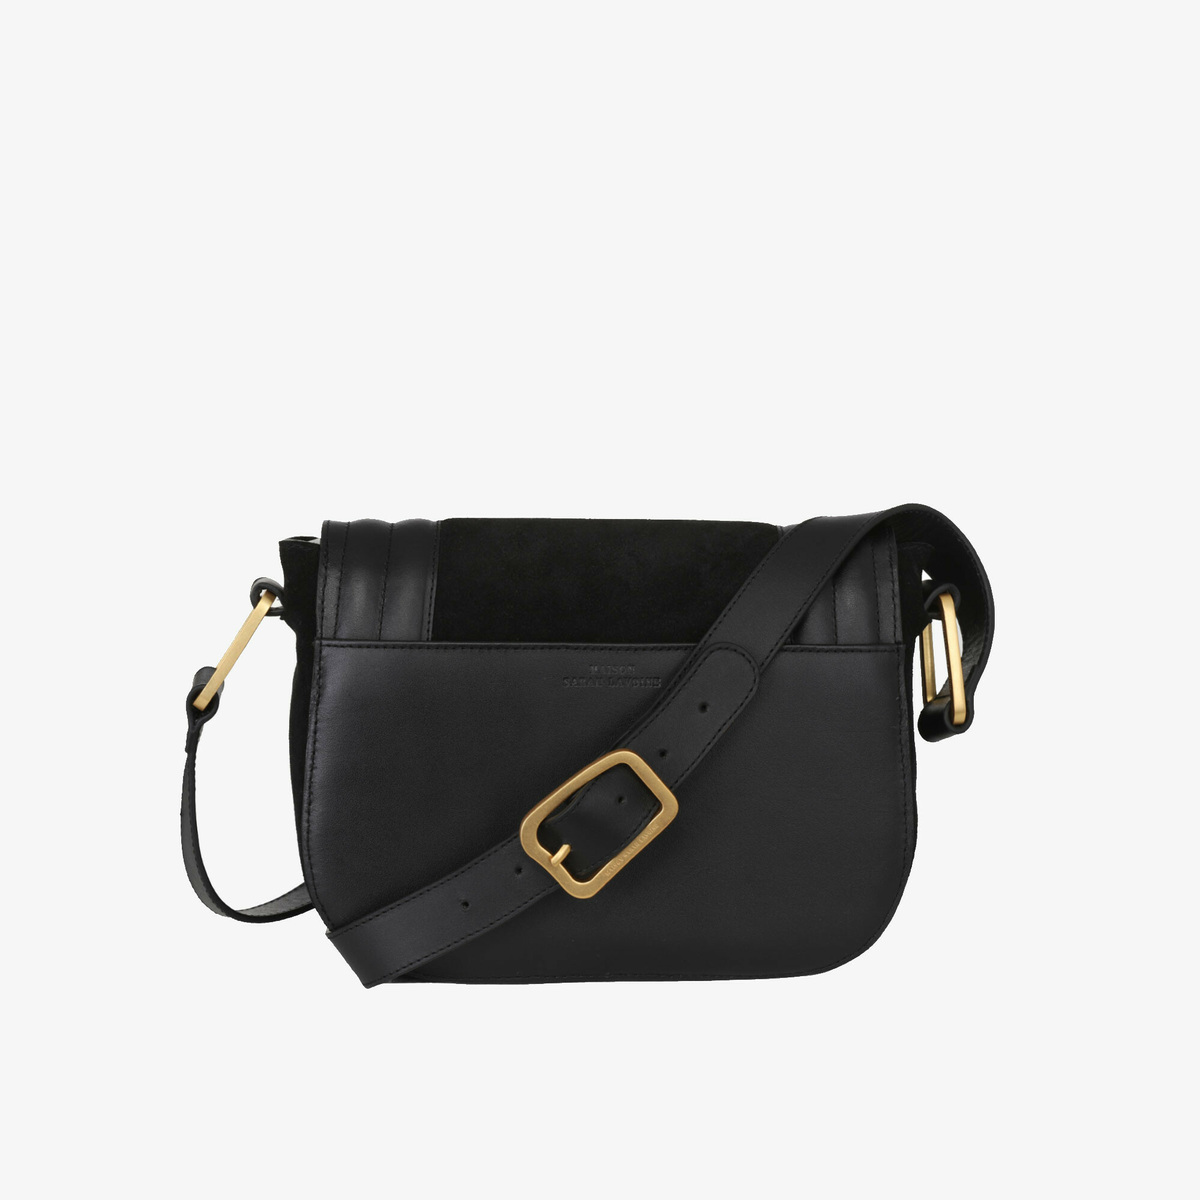 Shoulder bag Barth, City Black - W23 x H16 x D7 cm - 100% leather  - image 5